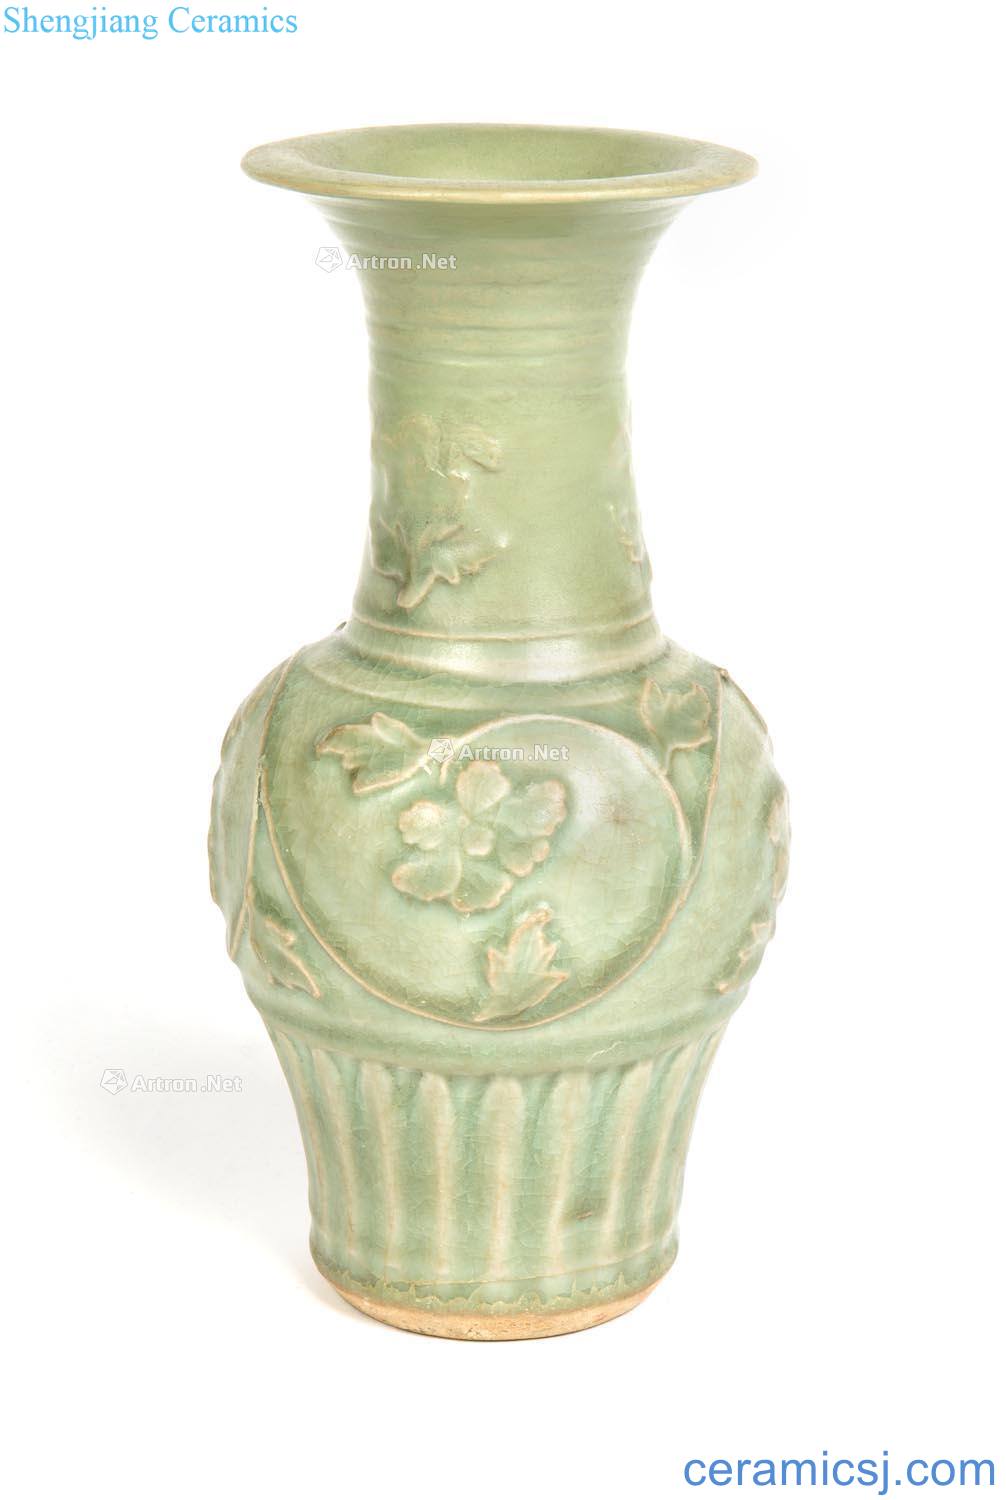 Yuan dynasty (1279-1368), longquan green glaze vase